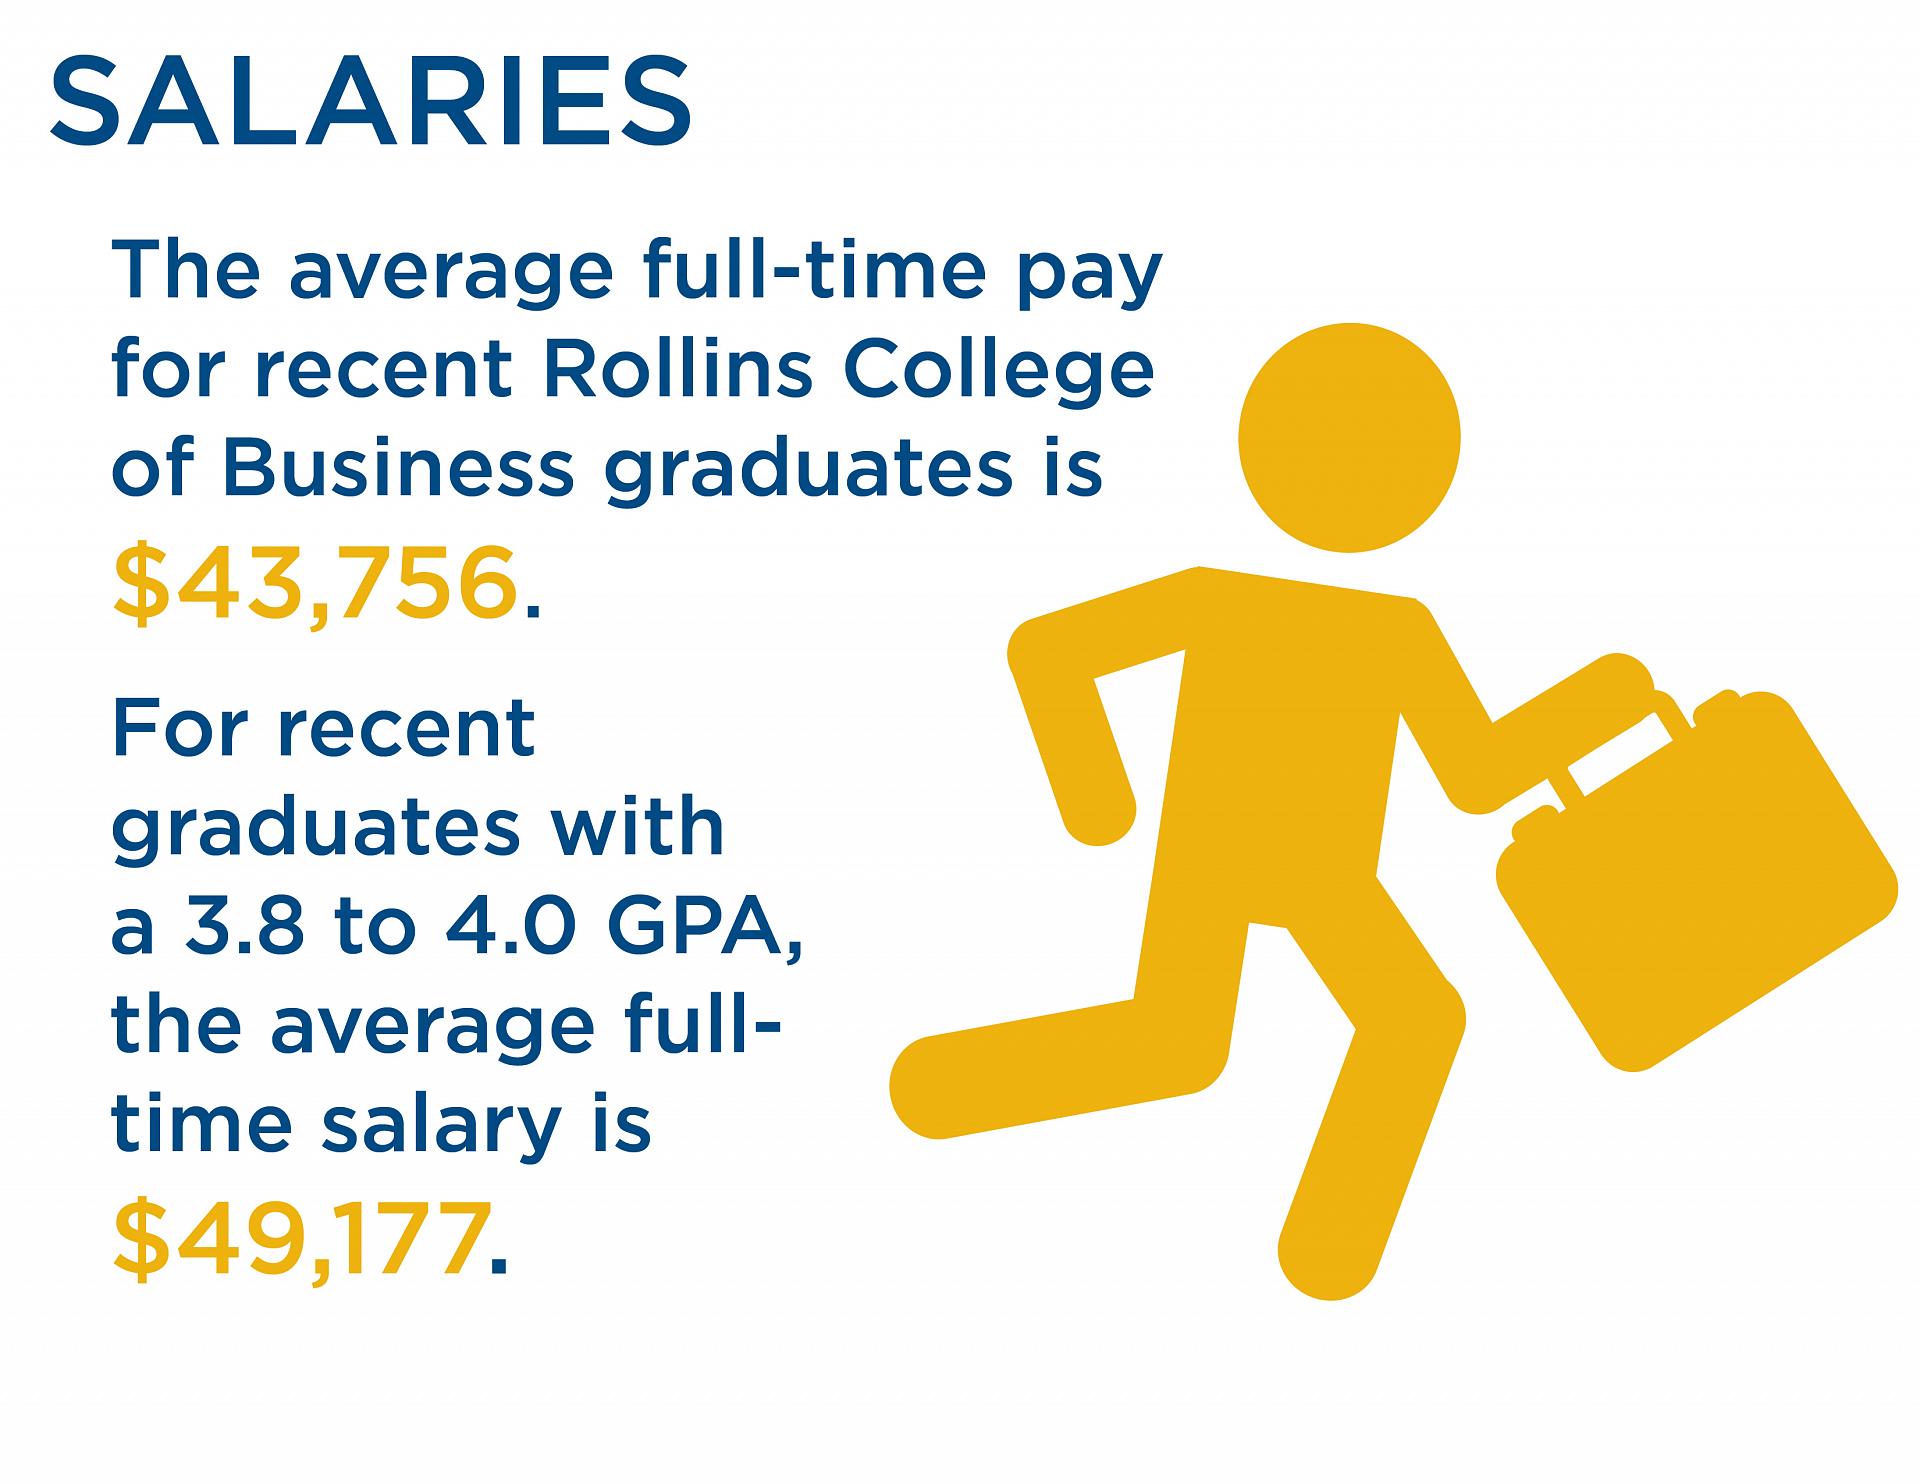 Salaries Infographic 